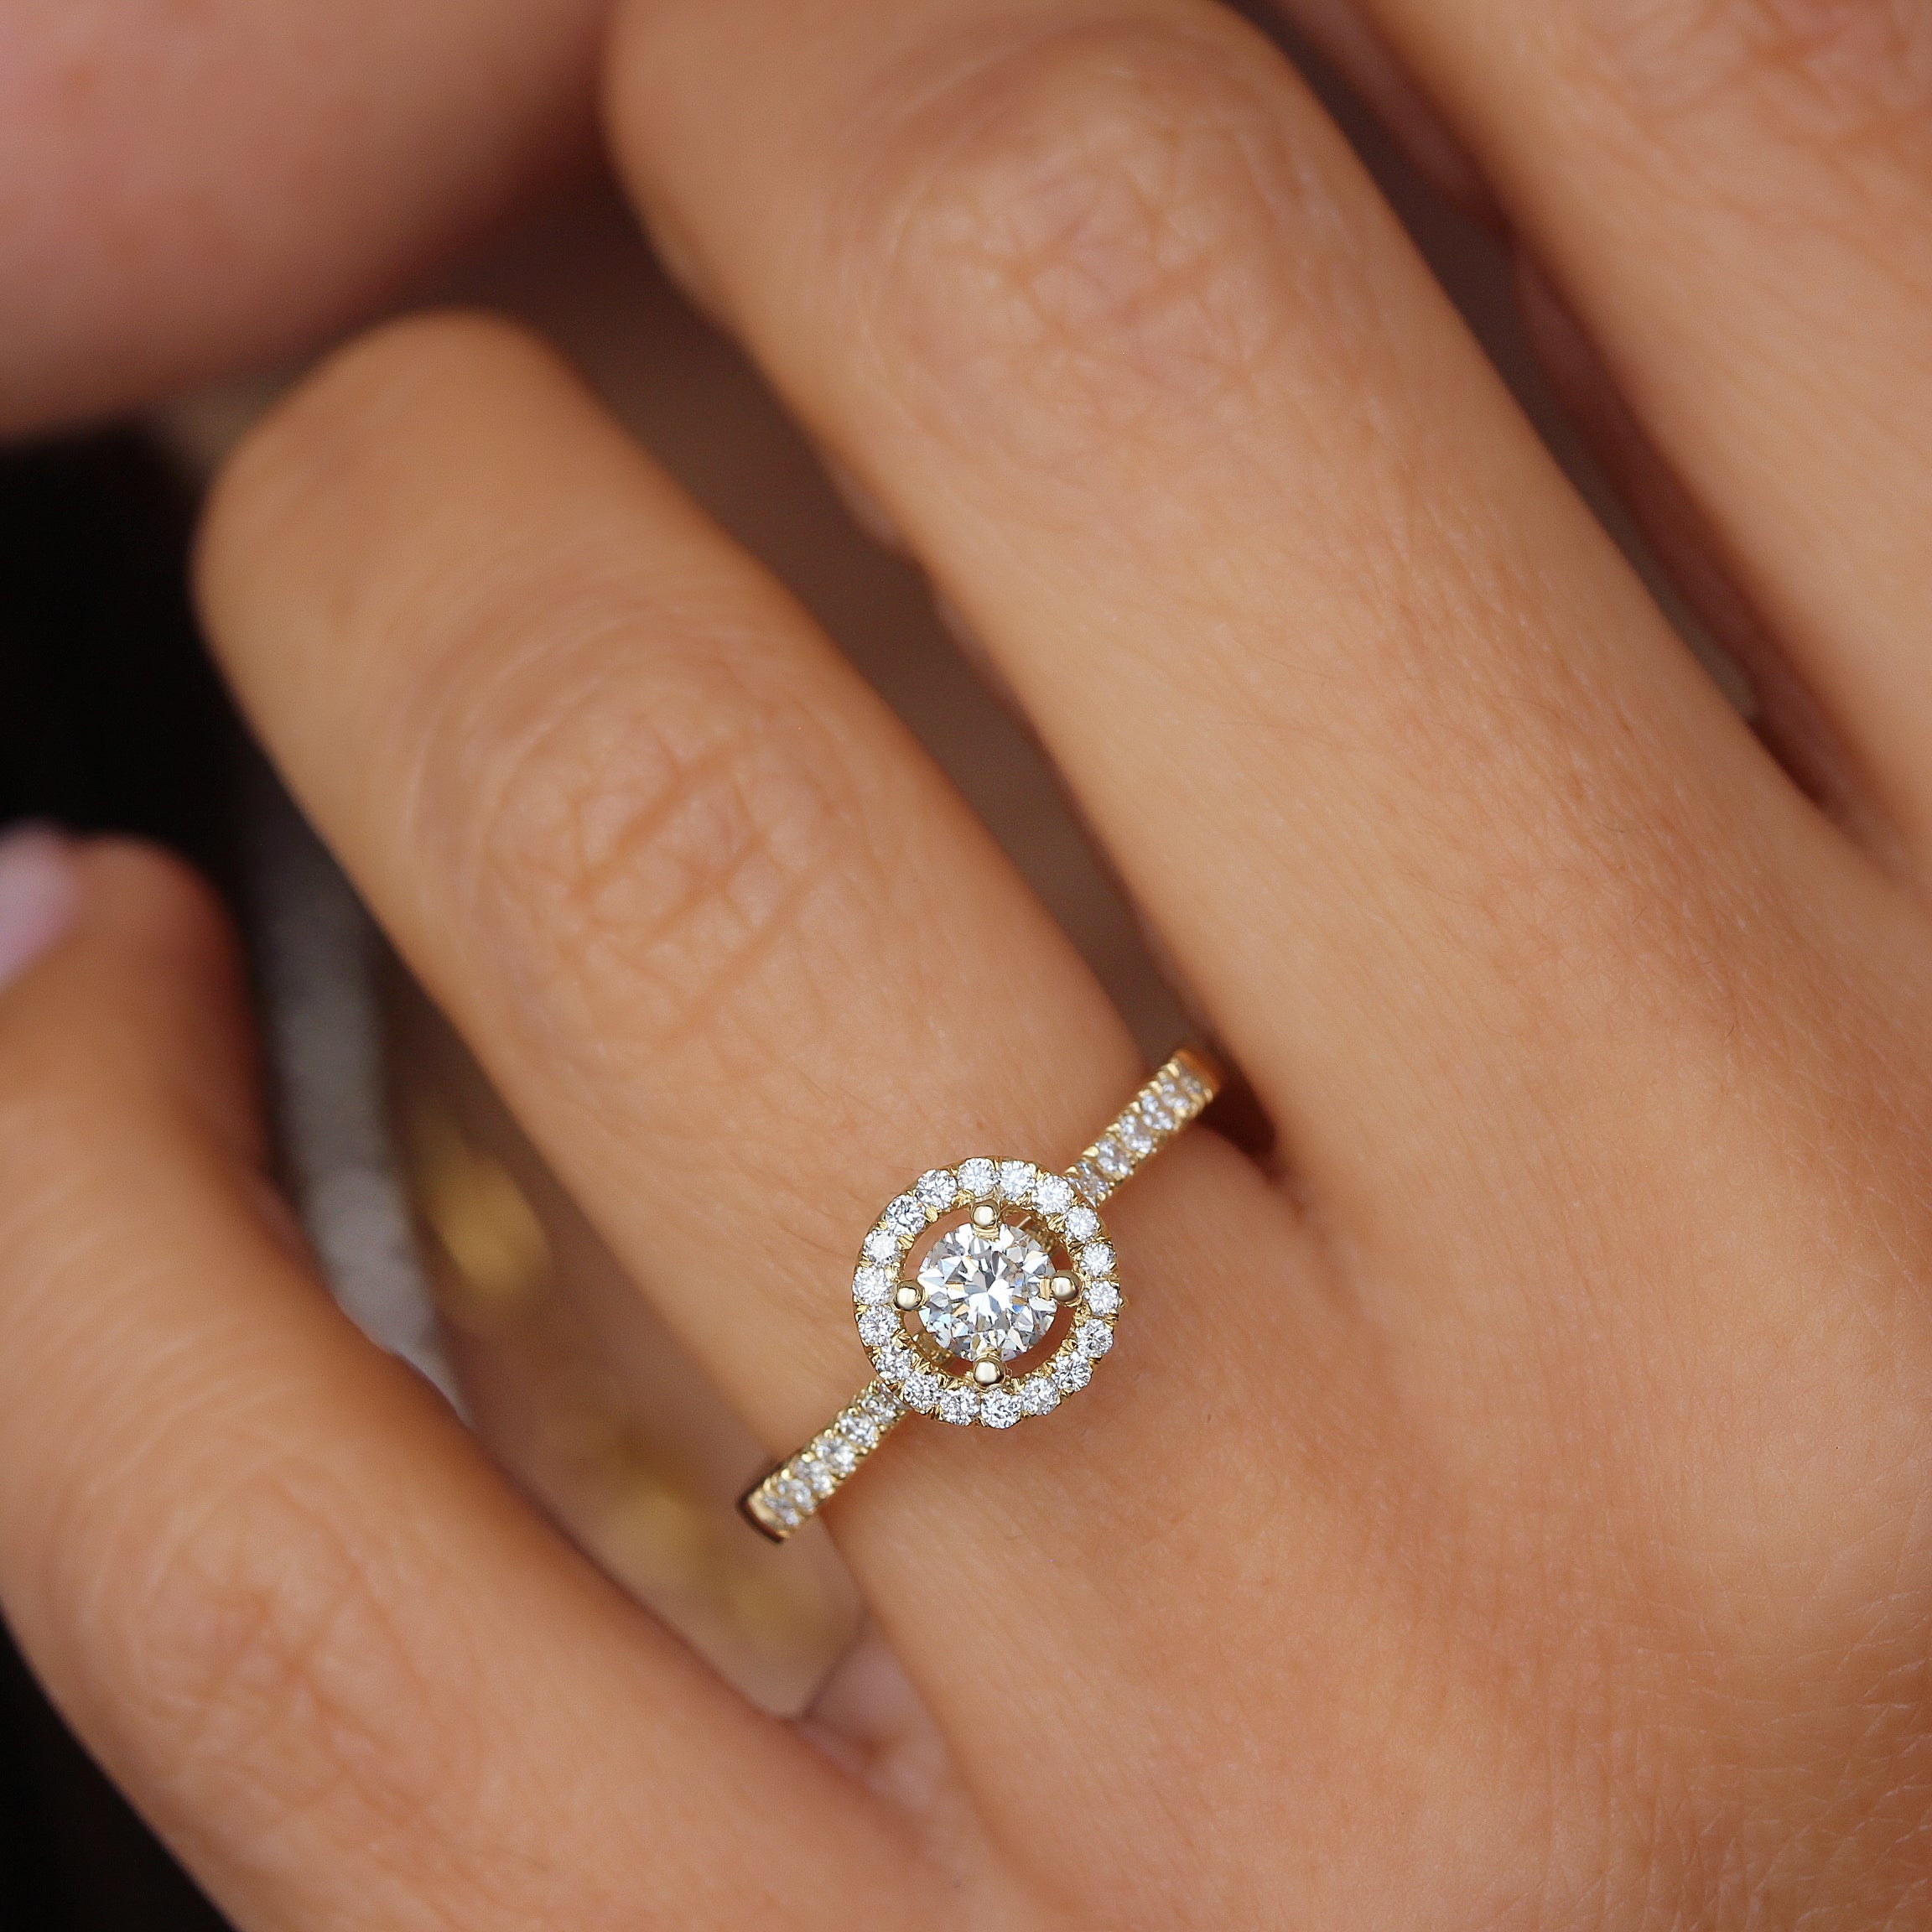 Simple and Elegant Minimalist Engagement Ring - Less Is More - Eurekalook